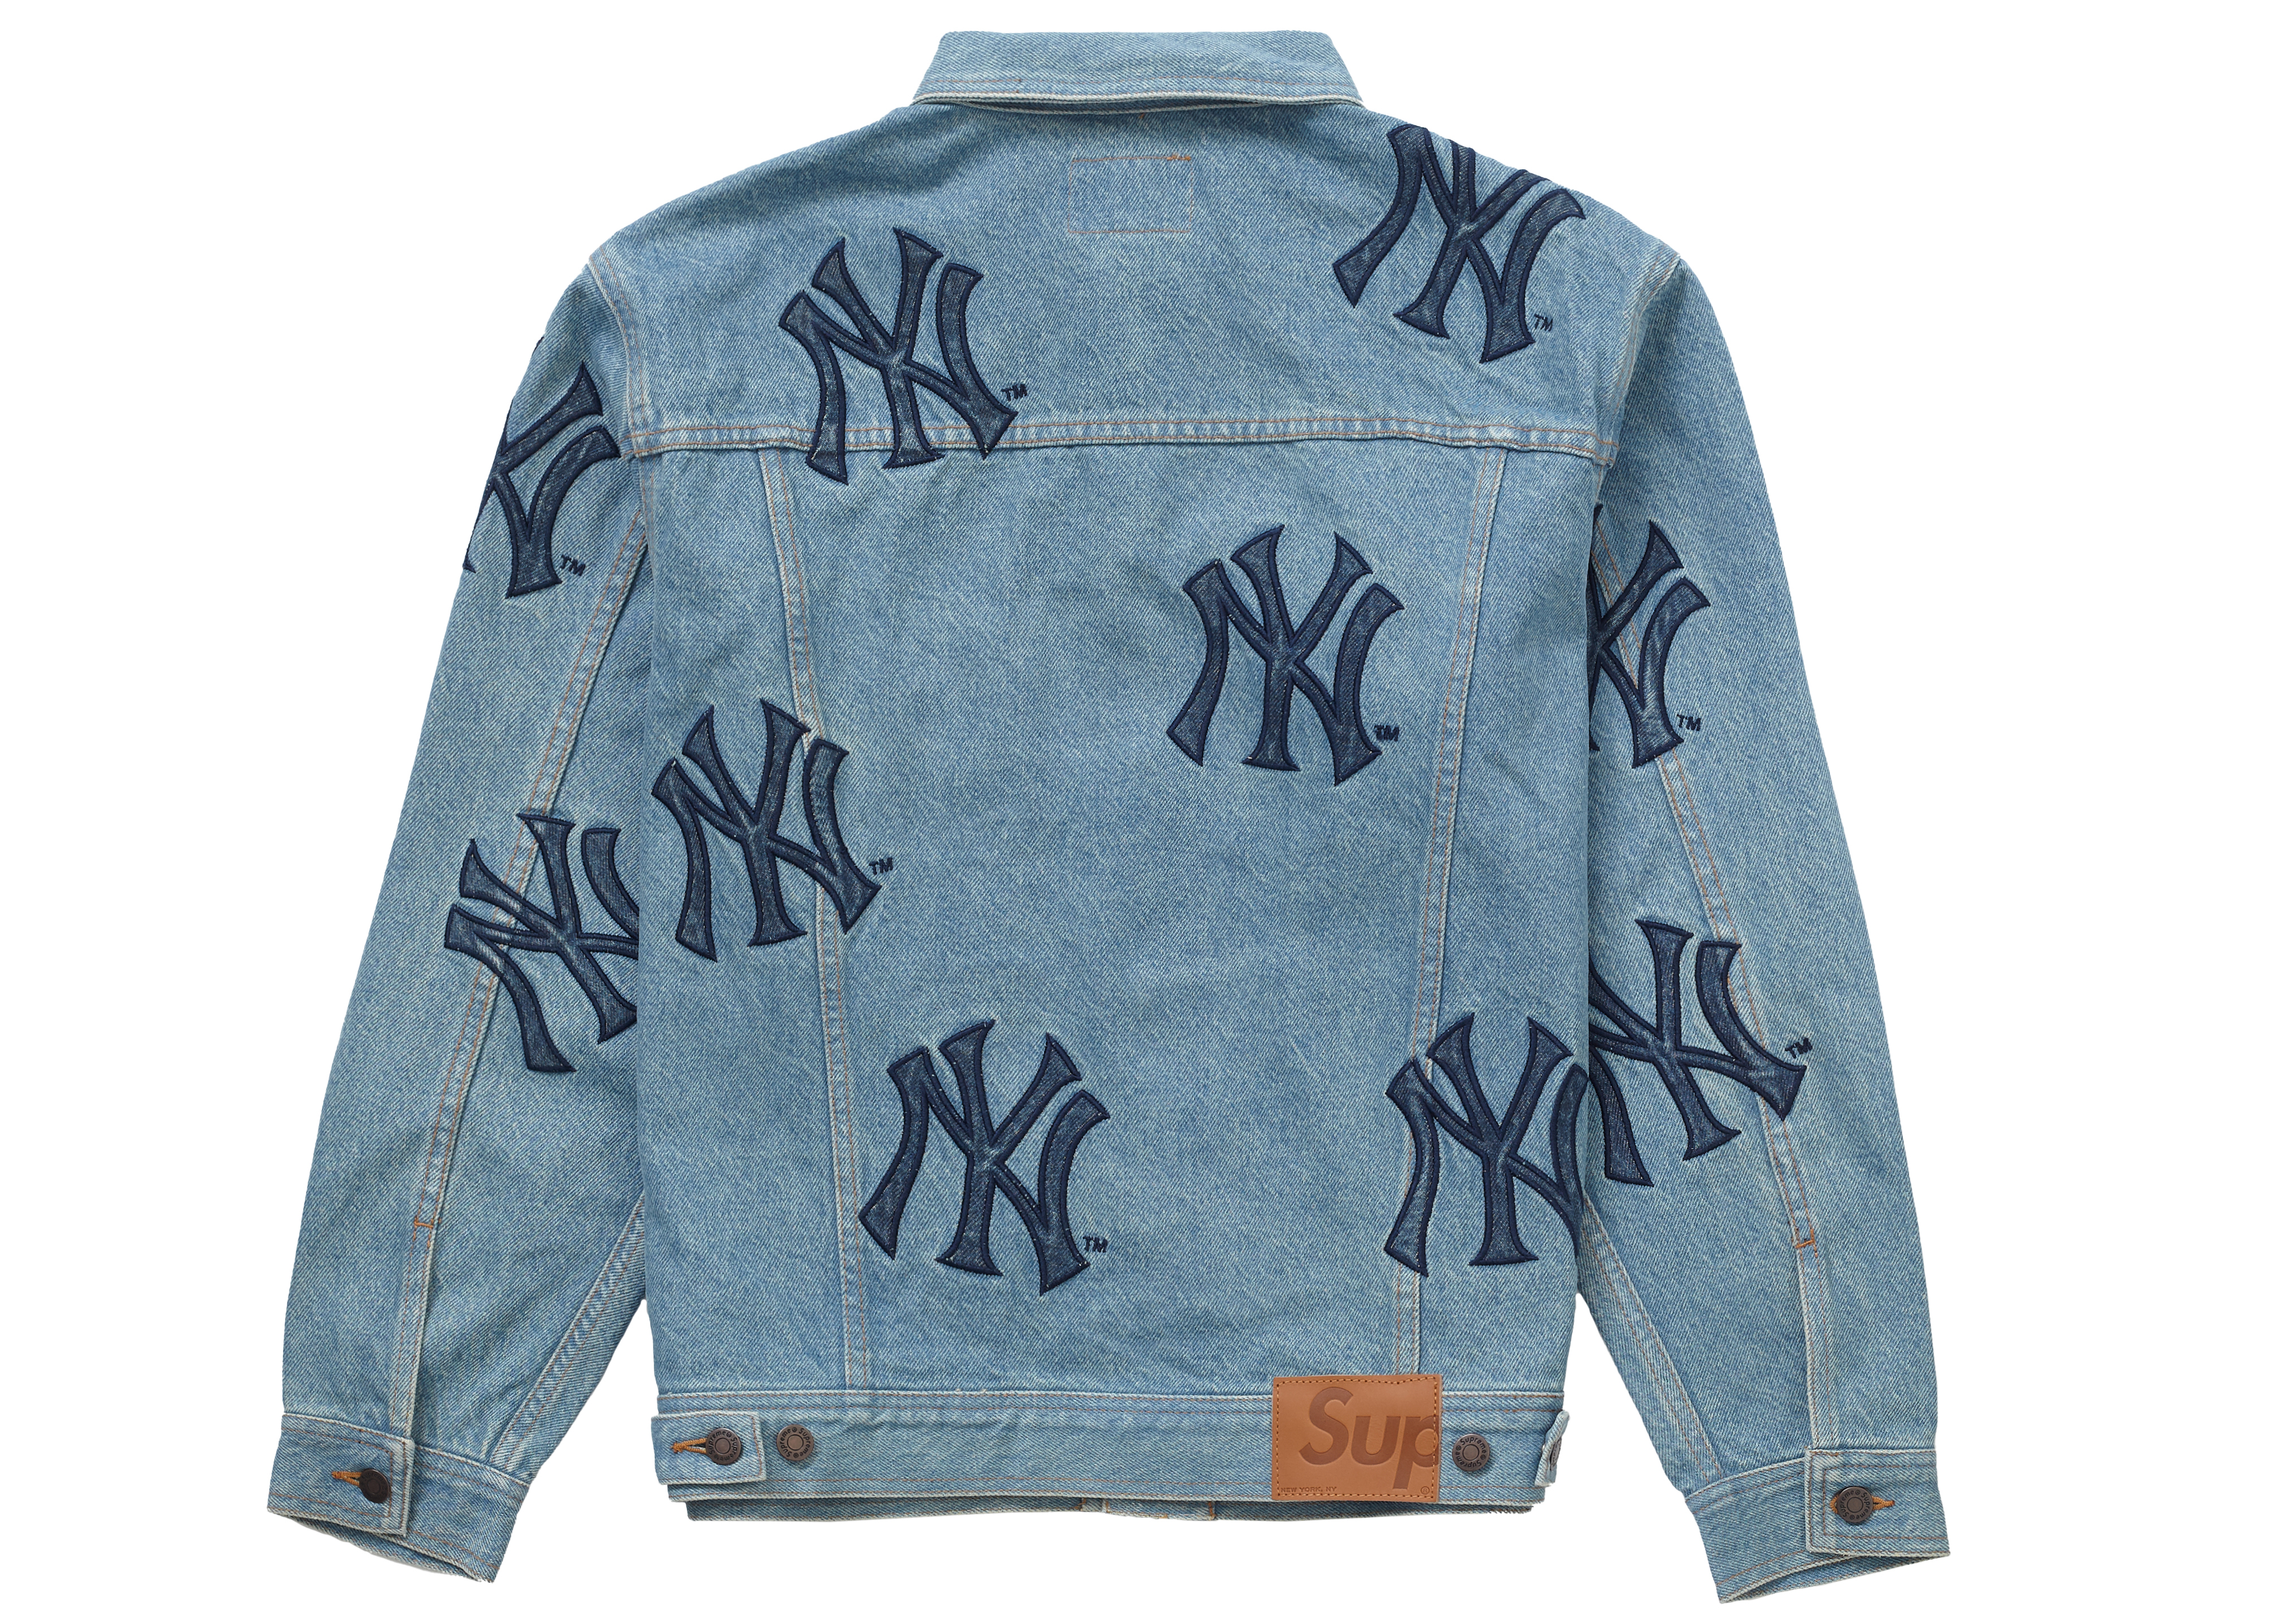 Supreme x New York Yankees Denim Trucker Jacket Washed Blue Men's 